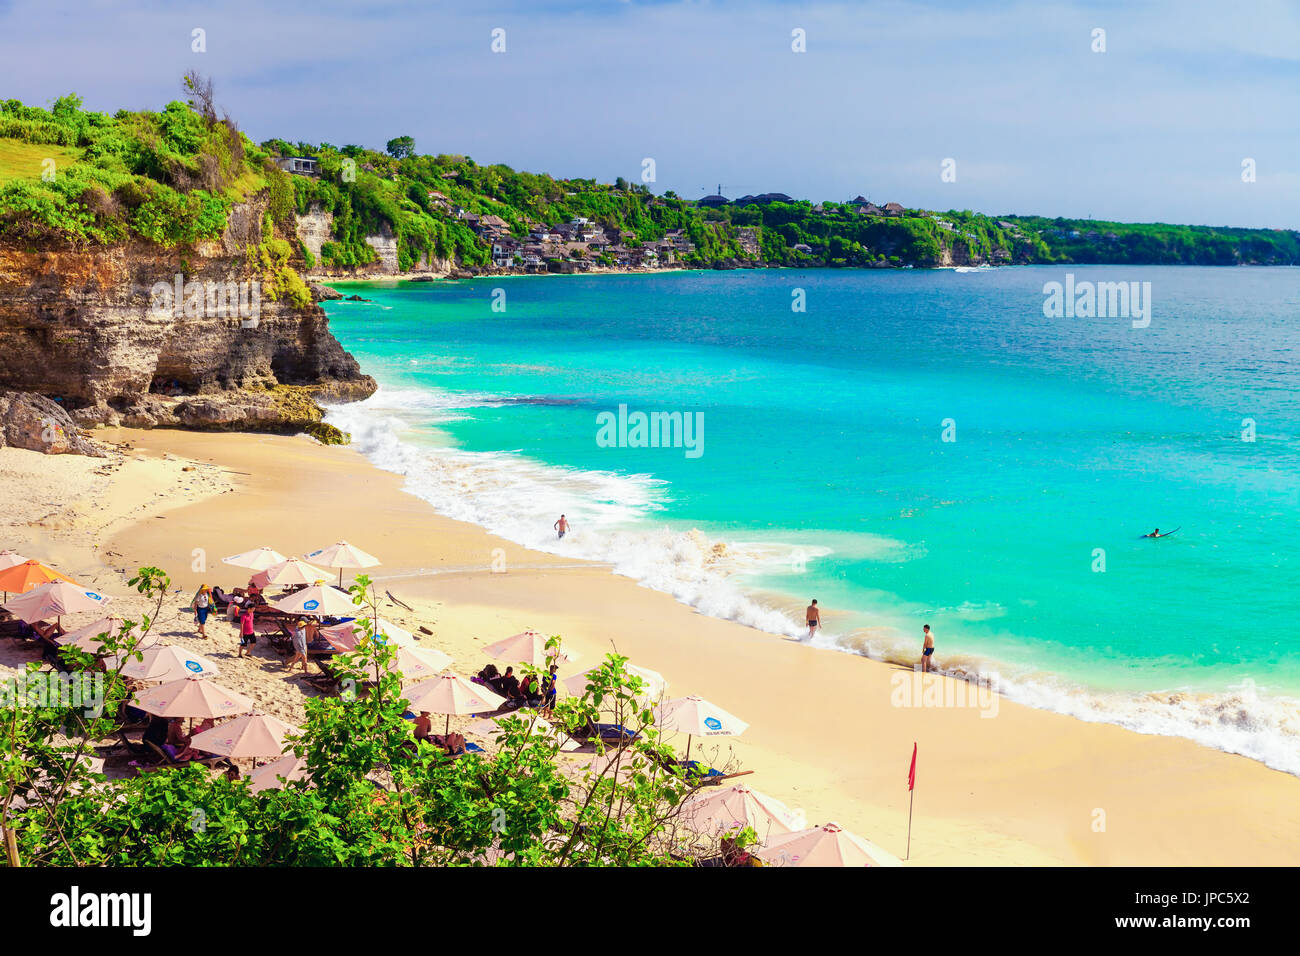 Bali sea beach nature, outdoor Indonesia. Bali island landscape Stock Photo  - Alamy